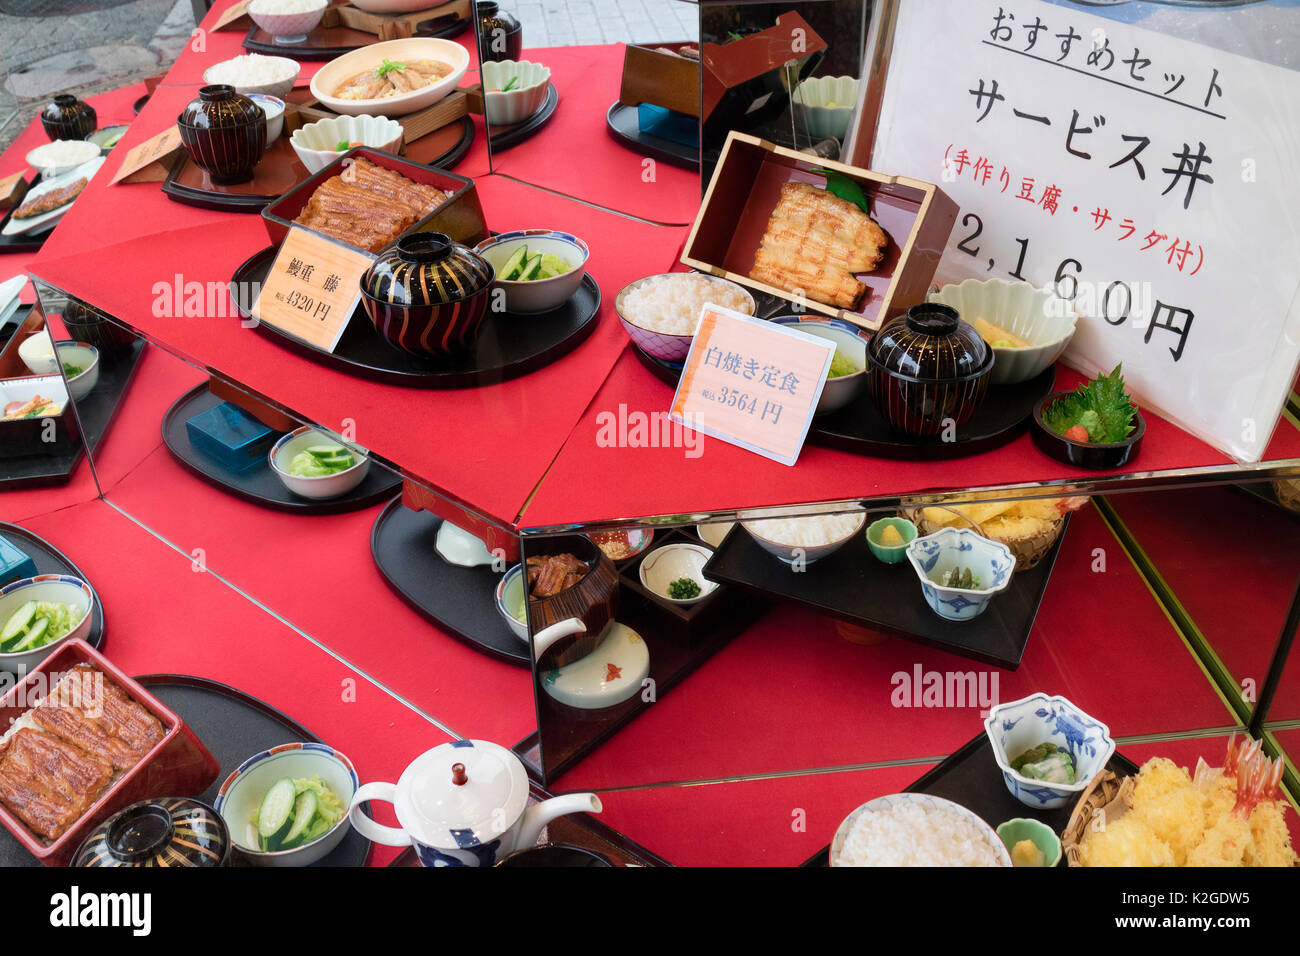 Tokyo, Japan - May 12, 2017:  Display of replica food outdoors in front of a restaurantDisplay of replica sweets en desserts outdoors in front of a re Stock Photo